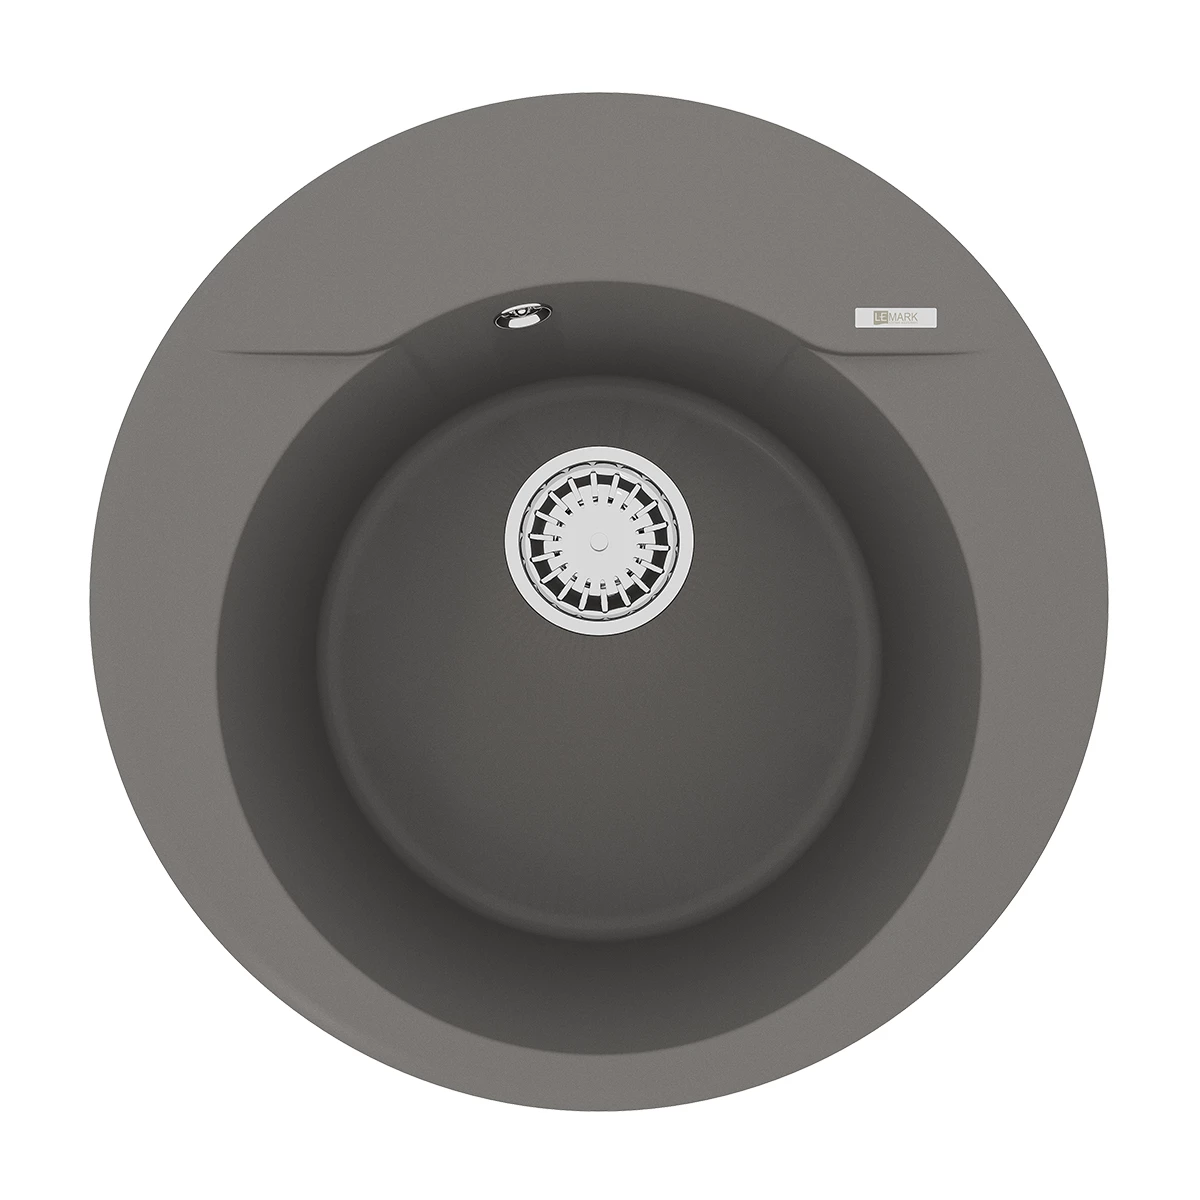 Кухонная мойка Lemark SULA 500 врезная круглая из кварцгранита цвет: Серый шёлк (9910005) - фото 1